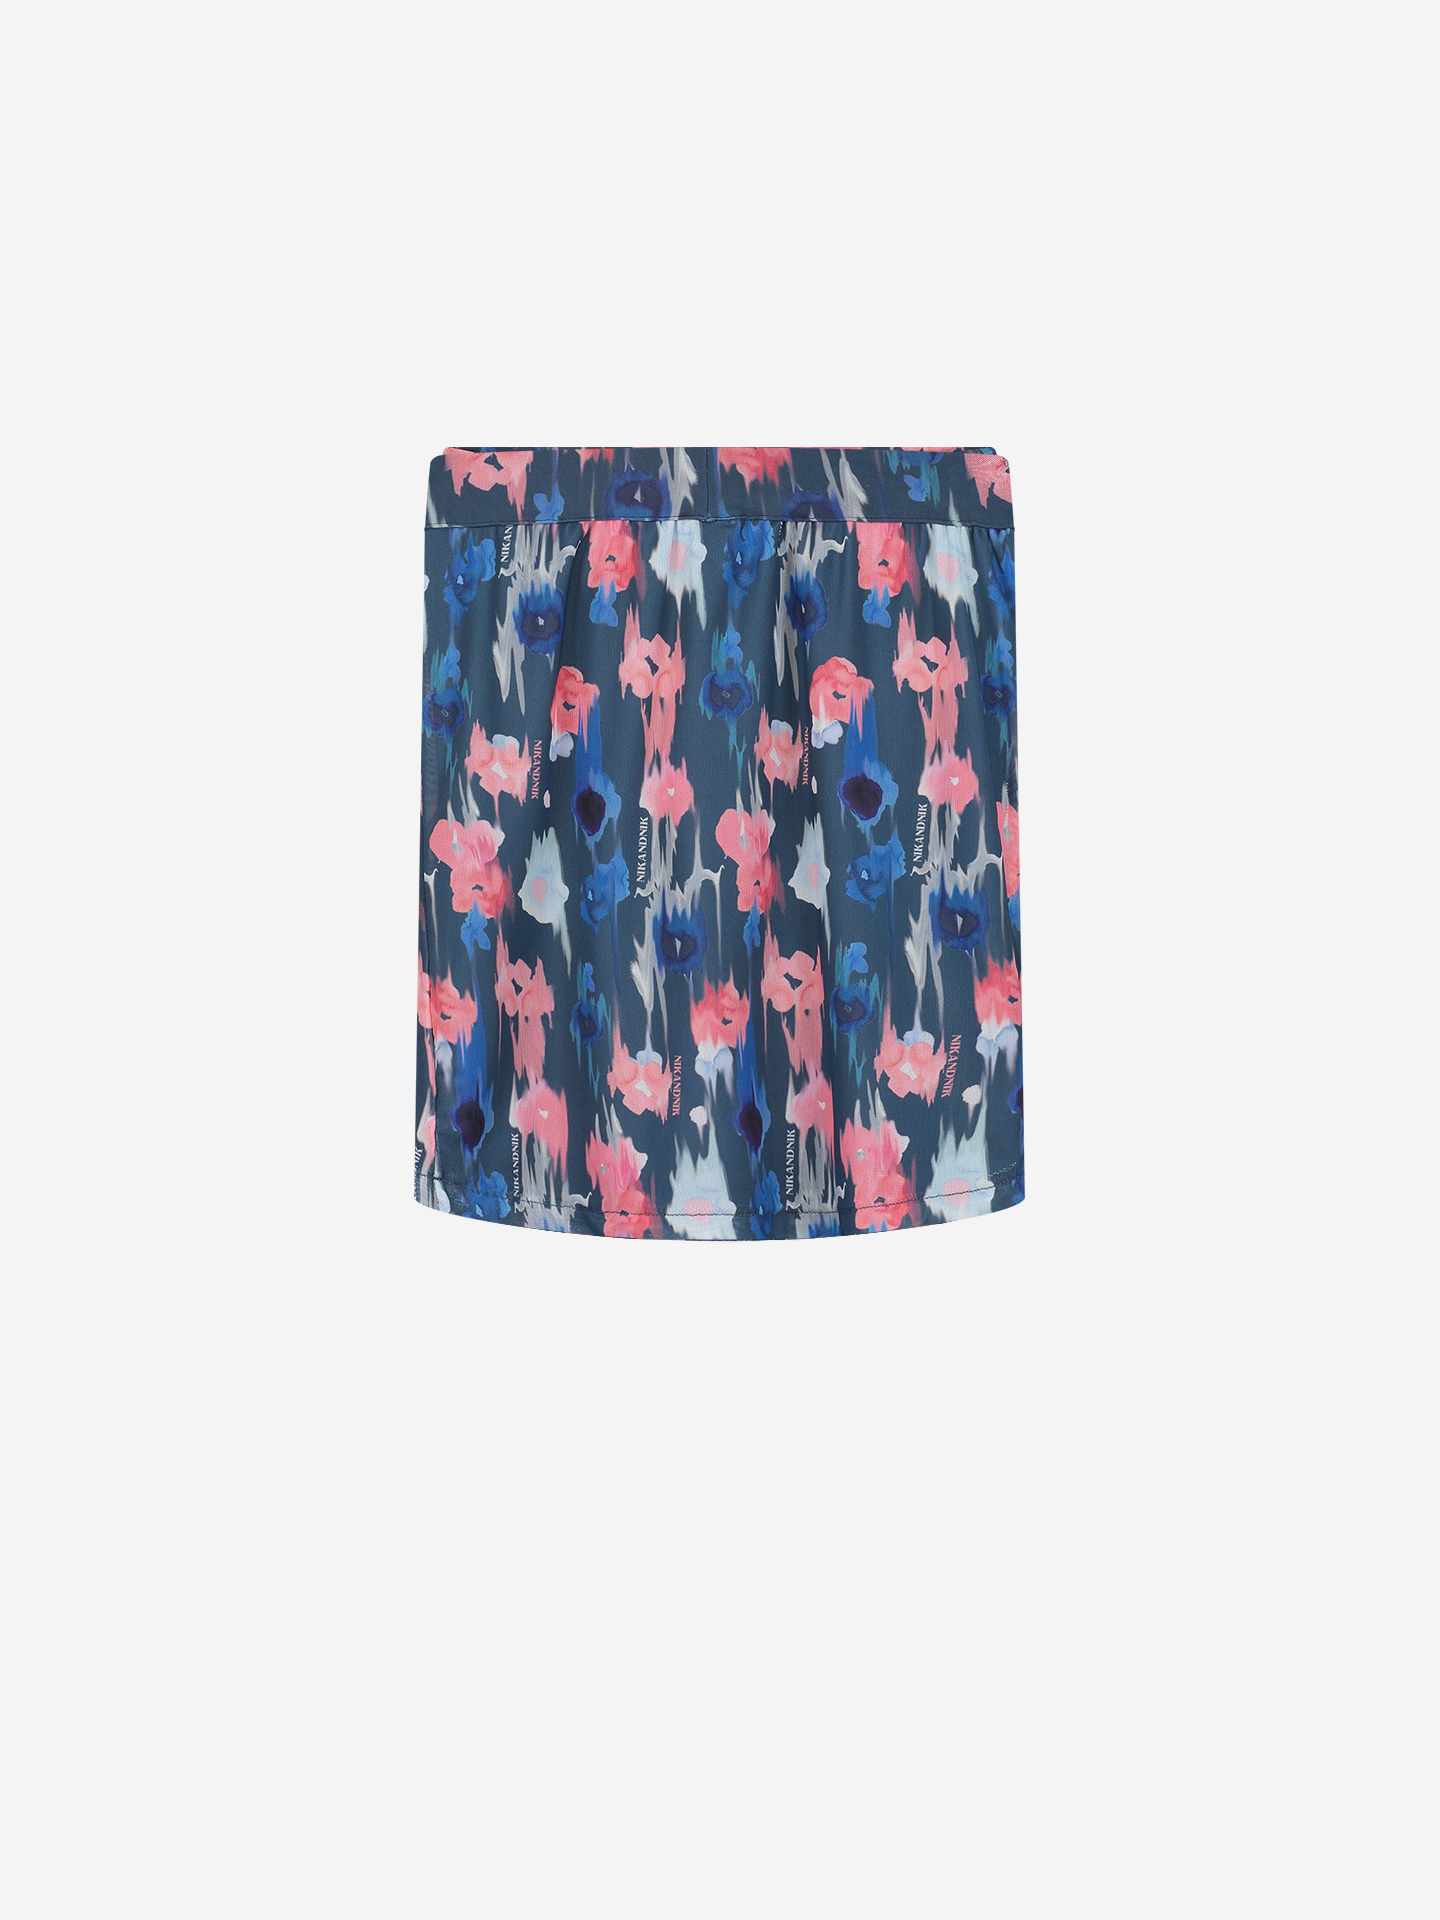 Floral Mesh Skirt